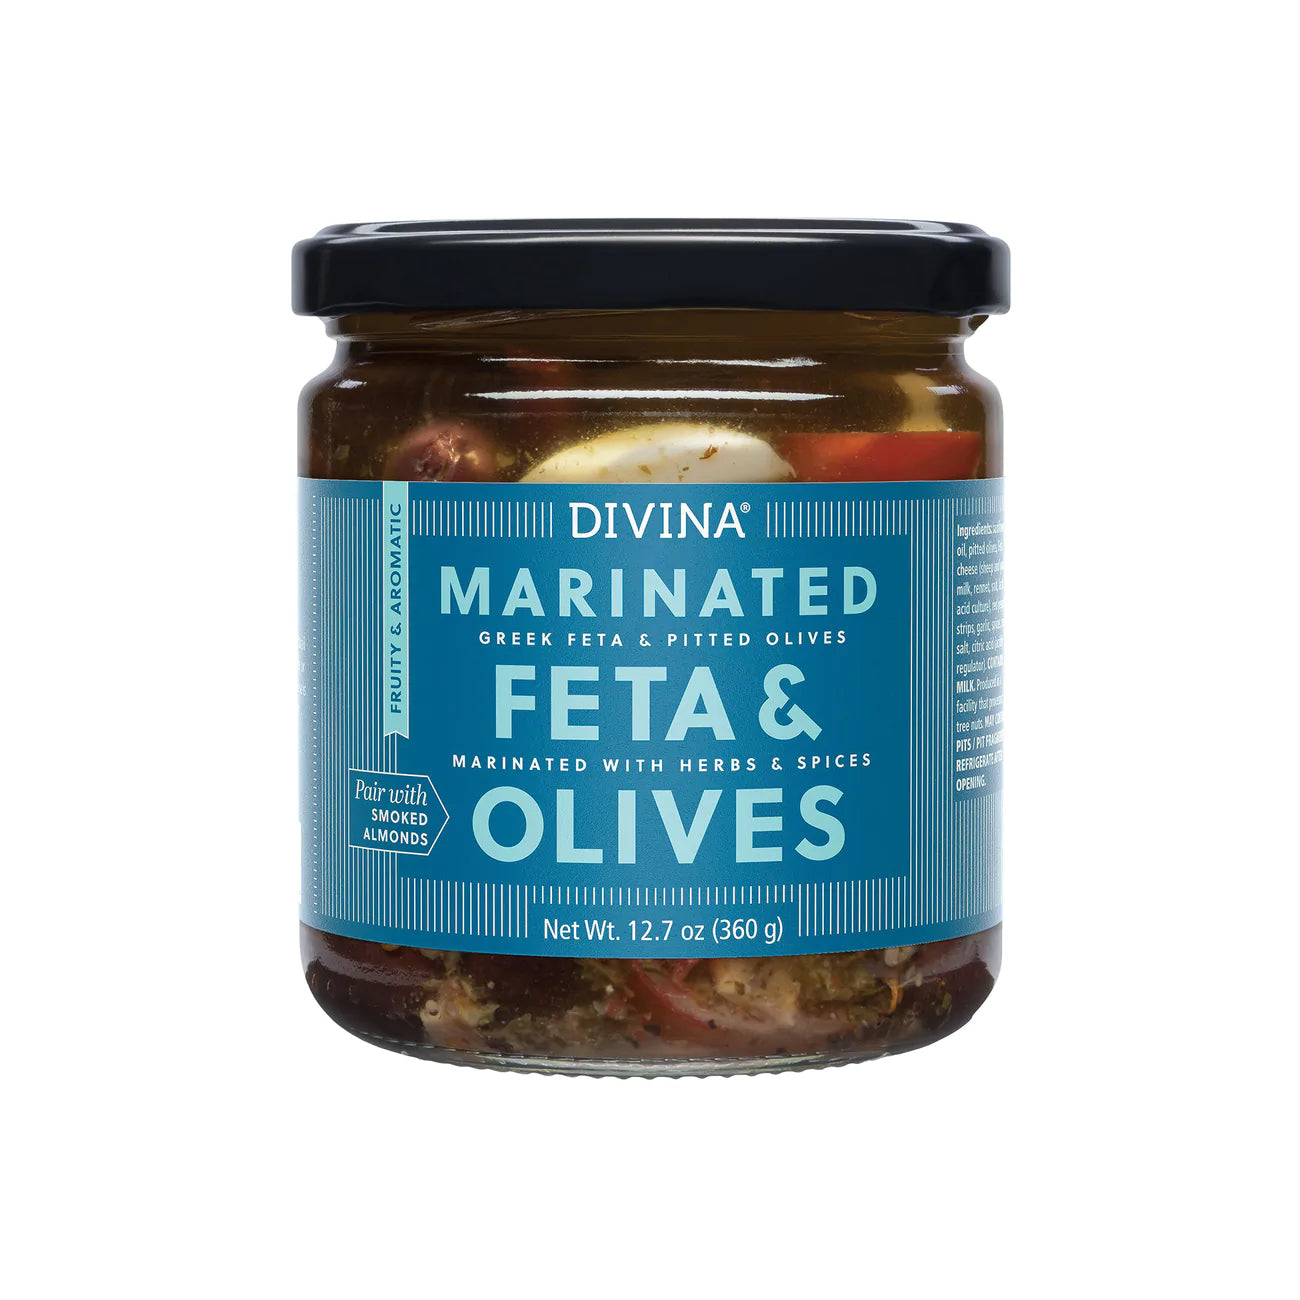 Marinated Feta and Olives, Divina, 12.7 oz